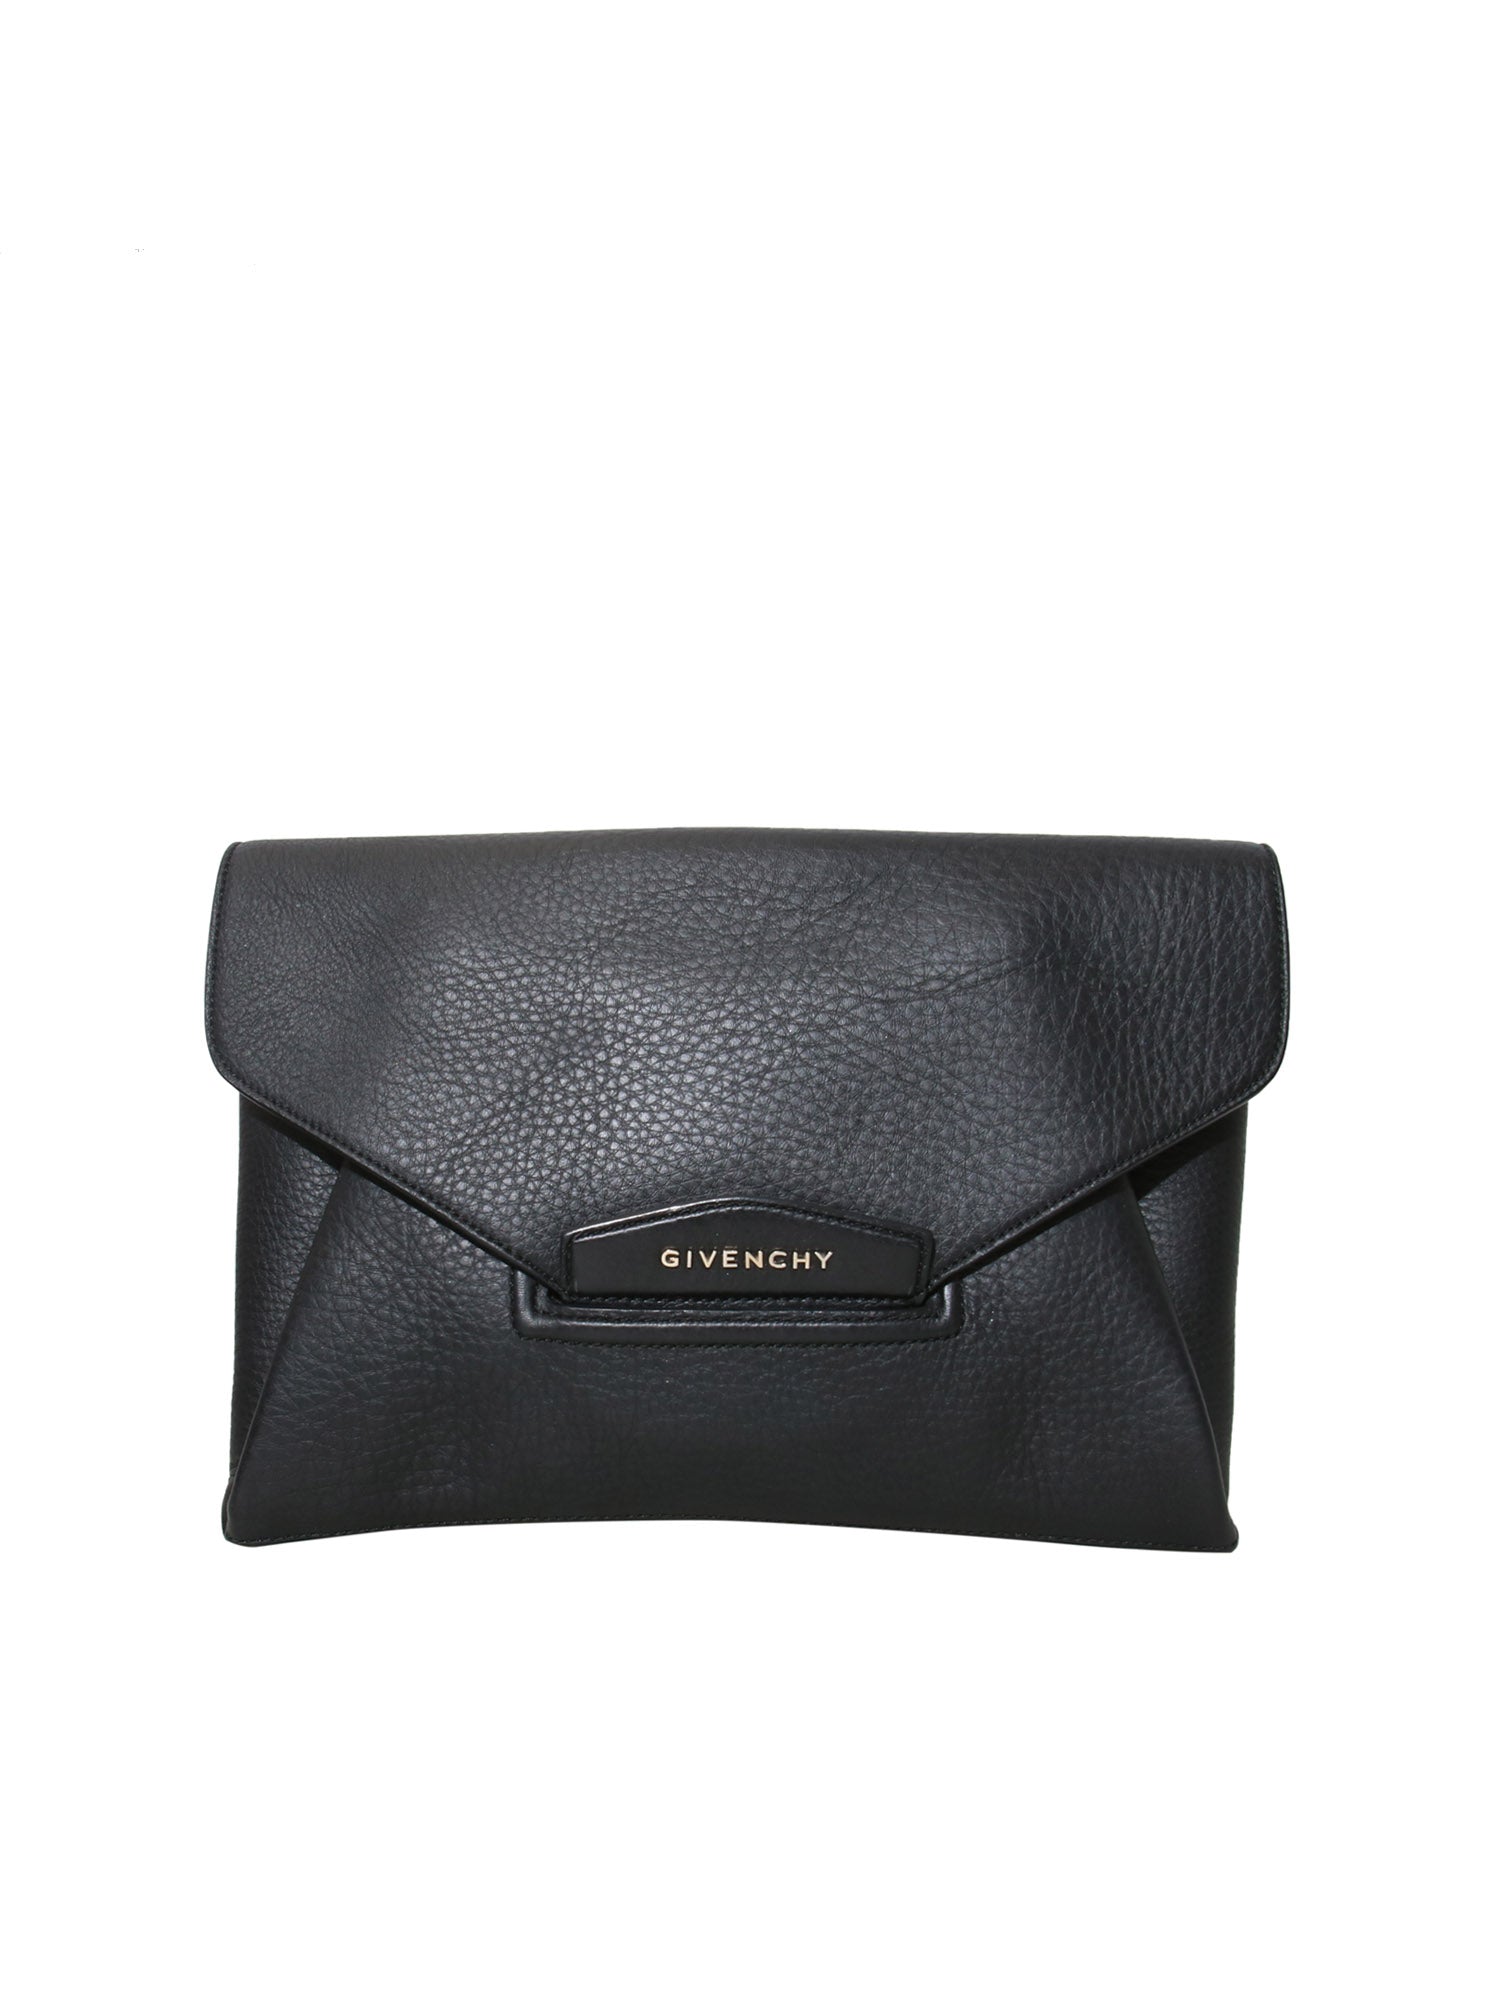 Givenchy Black Leather Envelope Antigona Clutch Givenchy